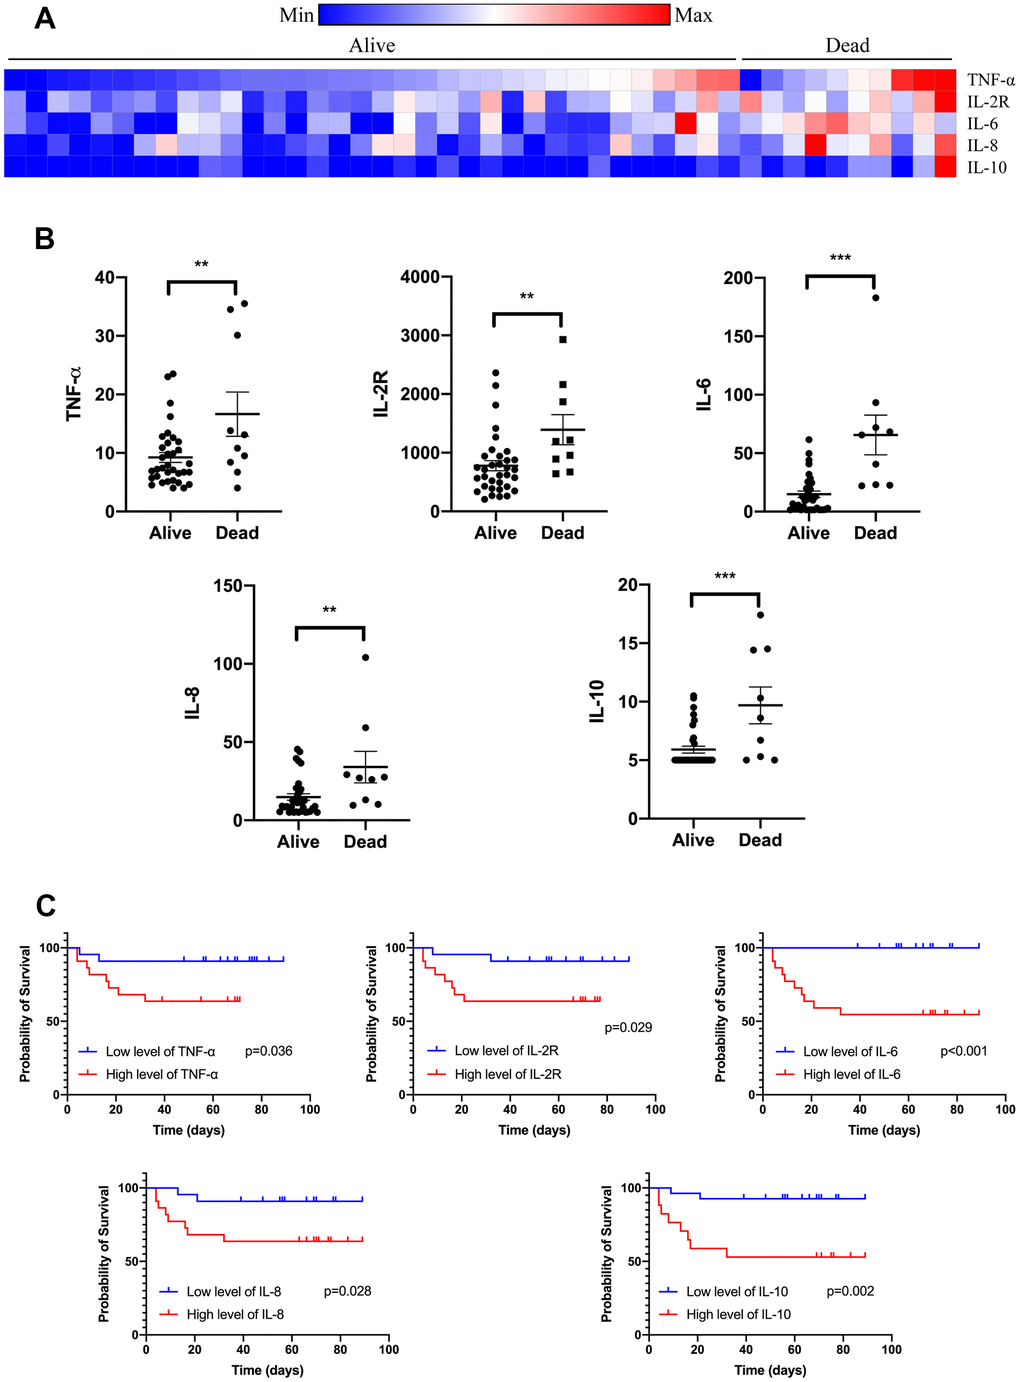 Serum cytokines on admission of cancer patients with COVID-19. Levels of TNF-α, IL-2R, IL-6, IL-8, and IL-10 were tested on admission of cancer patients with COVID-19 divided by the outcome (A). Levels of TNF-α, IL-2R, IL-6, IL-8, and IL-10 were increased in those patients who died from COVID-19 (B). Levels of TNF-α, IL-2R, IL-6, IL-8, and IL-10 were correlated with survival time of cancer patients with COVID-19 (C).